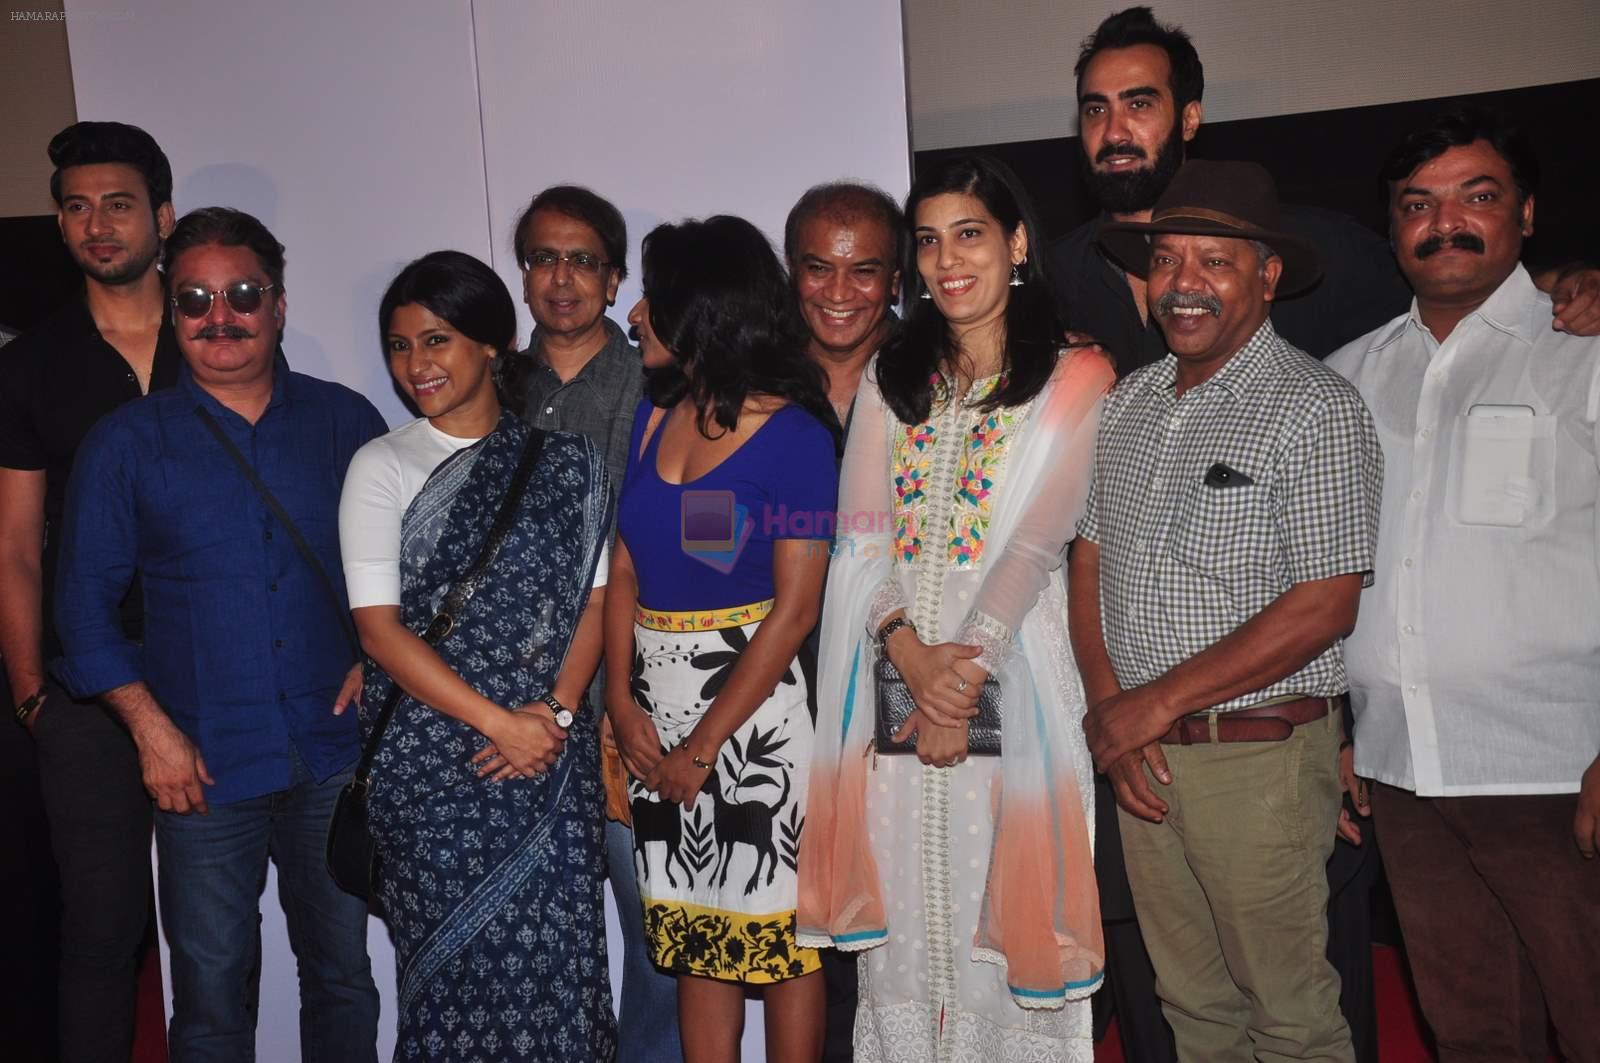 Konkona Sen Sharma, Vinay Pathak, Ranvir Shorey, Tannishtha Chatterjee, Anant Mahadevan, Vipin Sharma at Gour Hari Daastan film launch in Cinemax, Mumbai on 25th May 2015